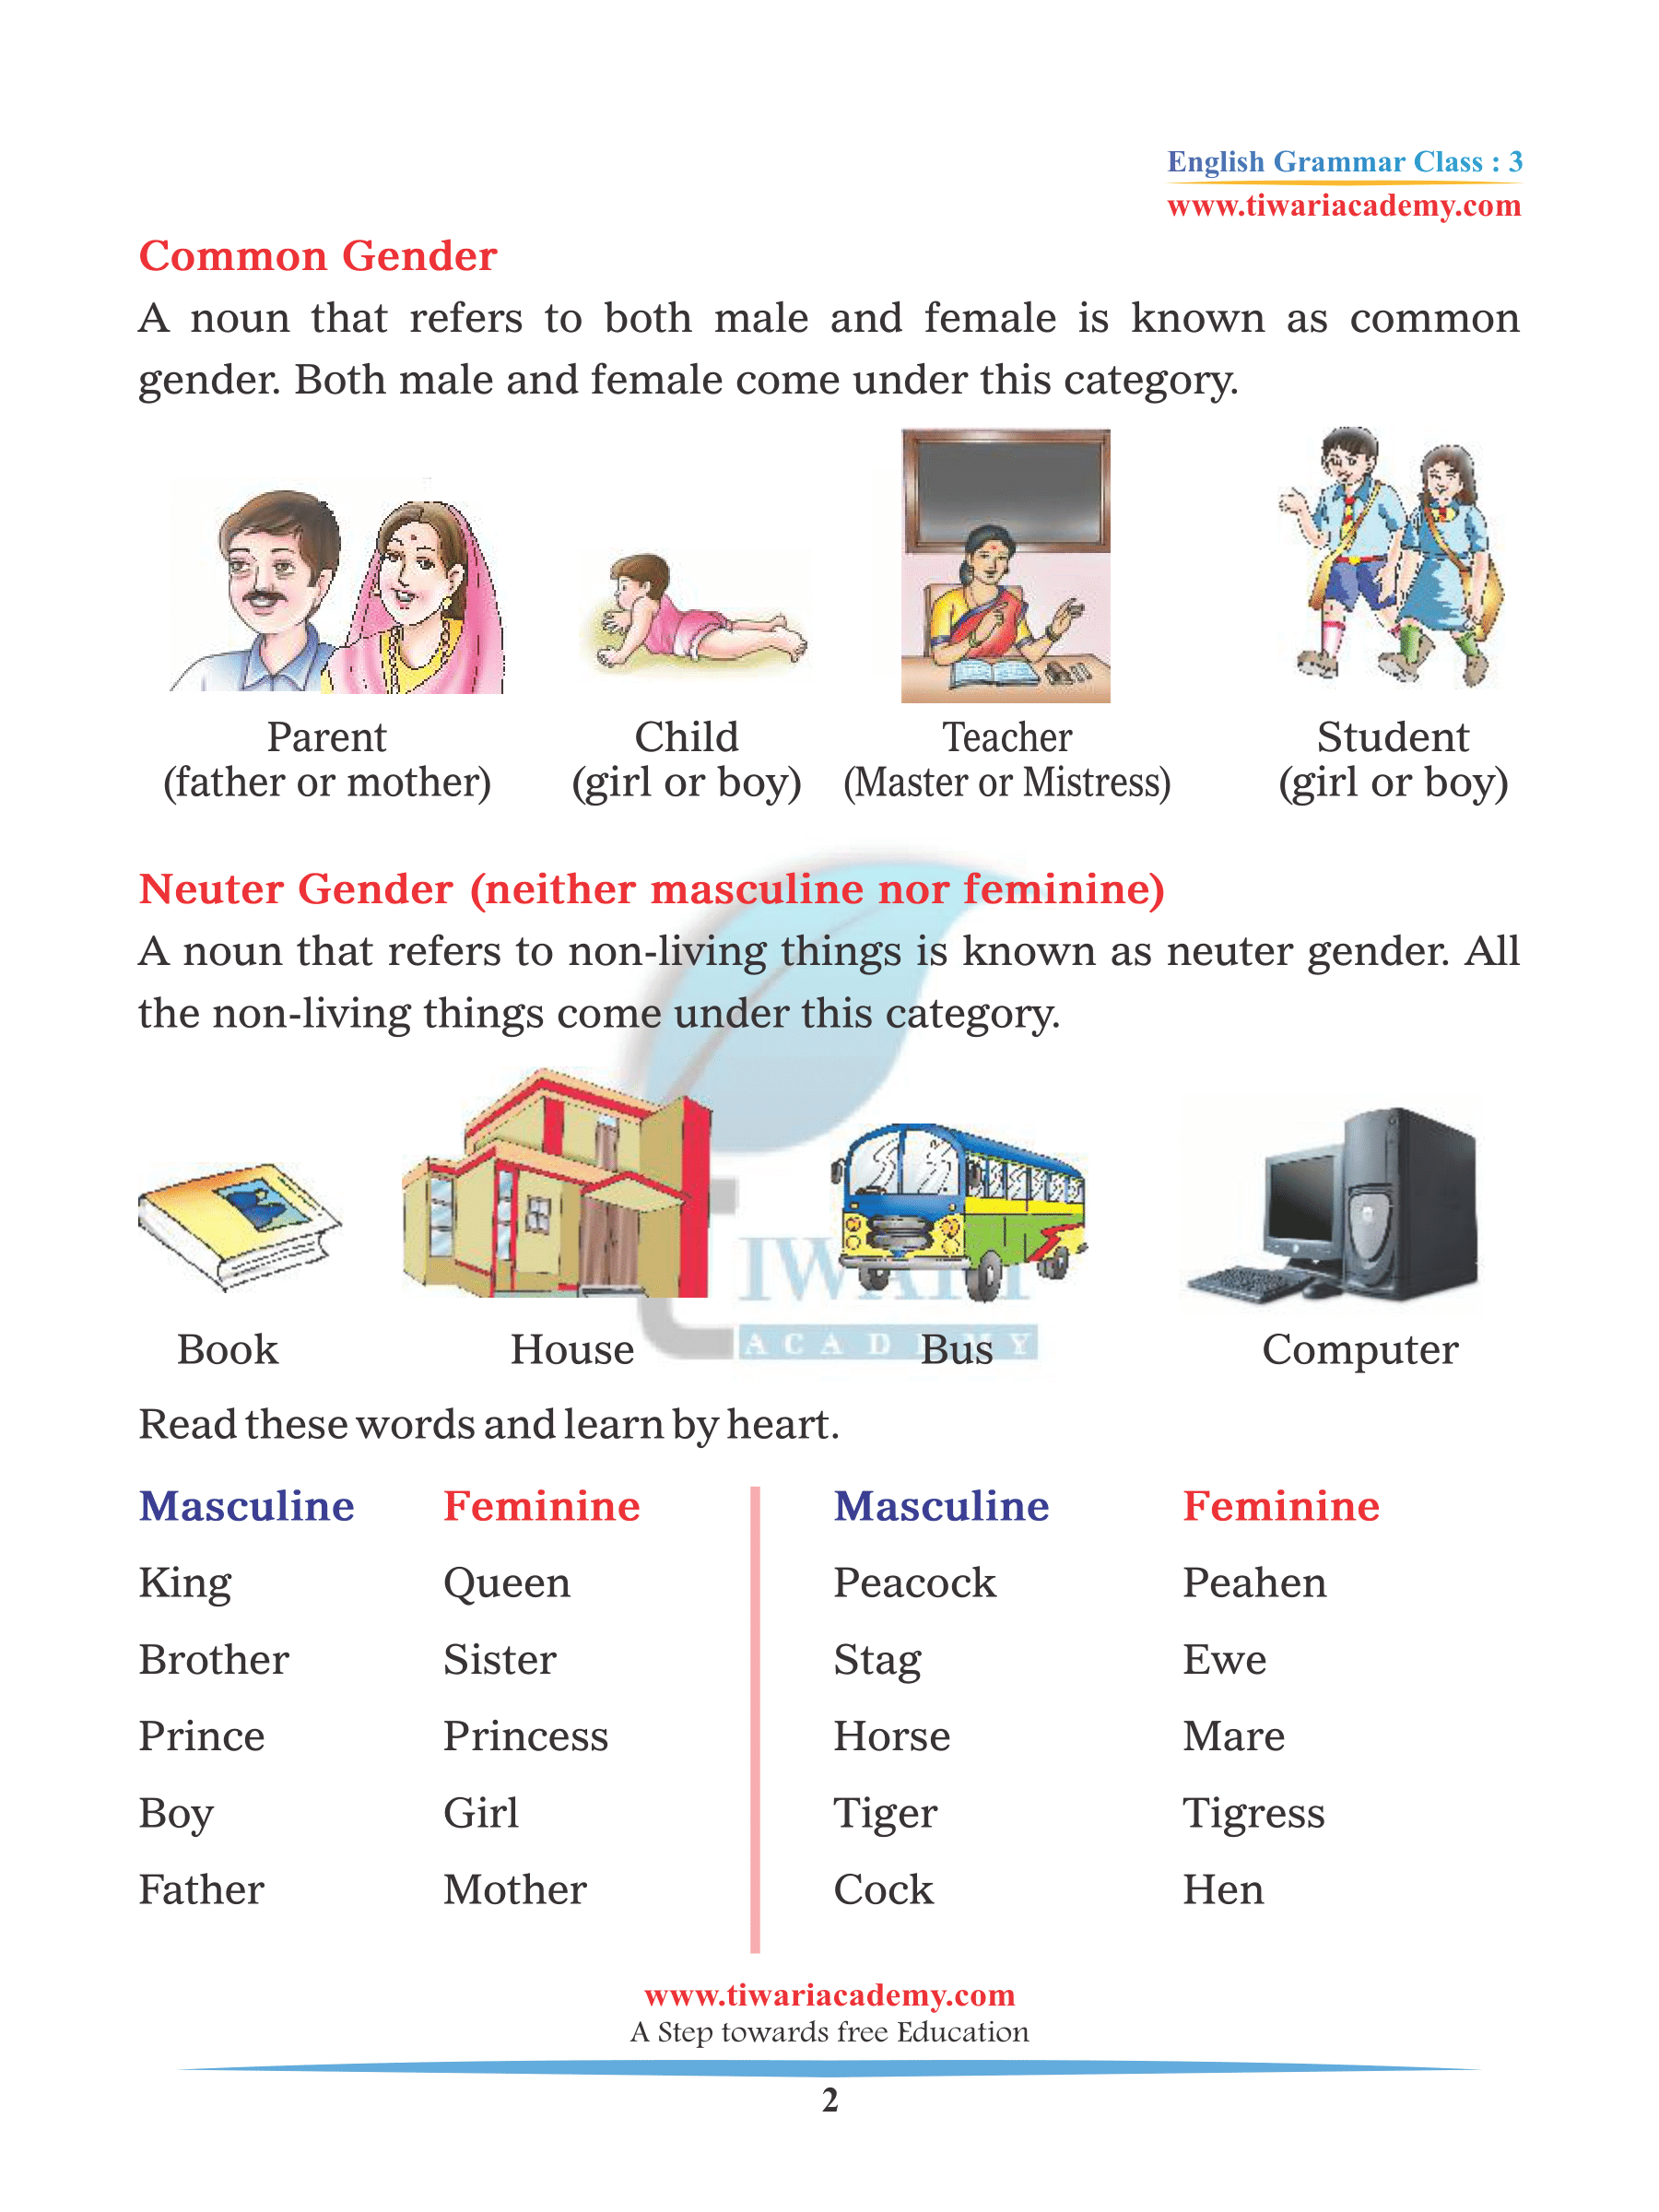 Gender Nouns Worksheet For Class 3